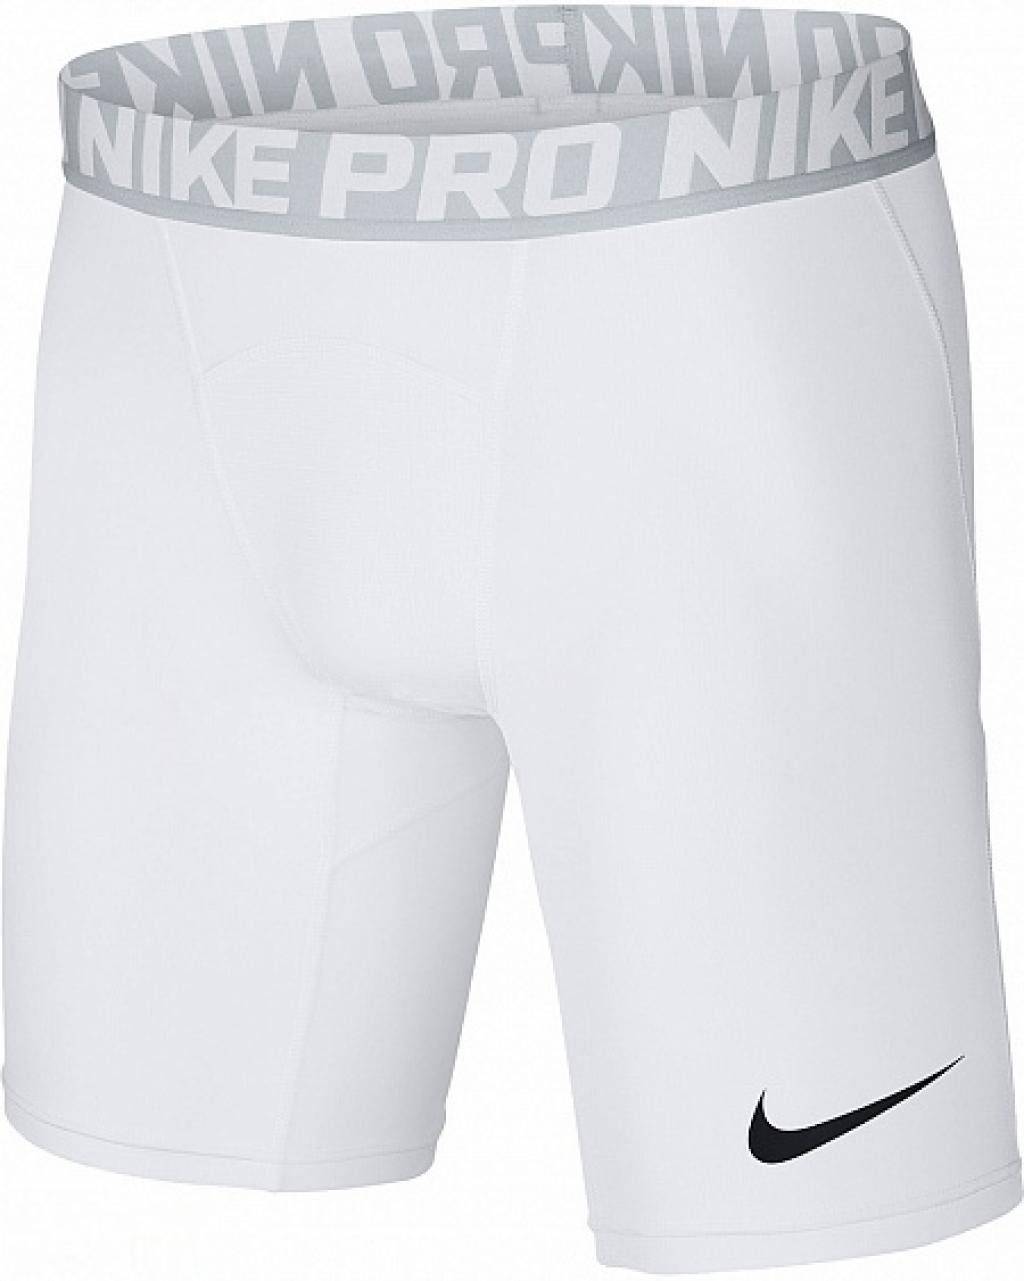 Термо шорты Nike Pro Compression Shorts